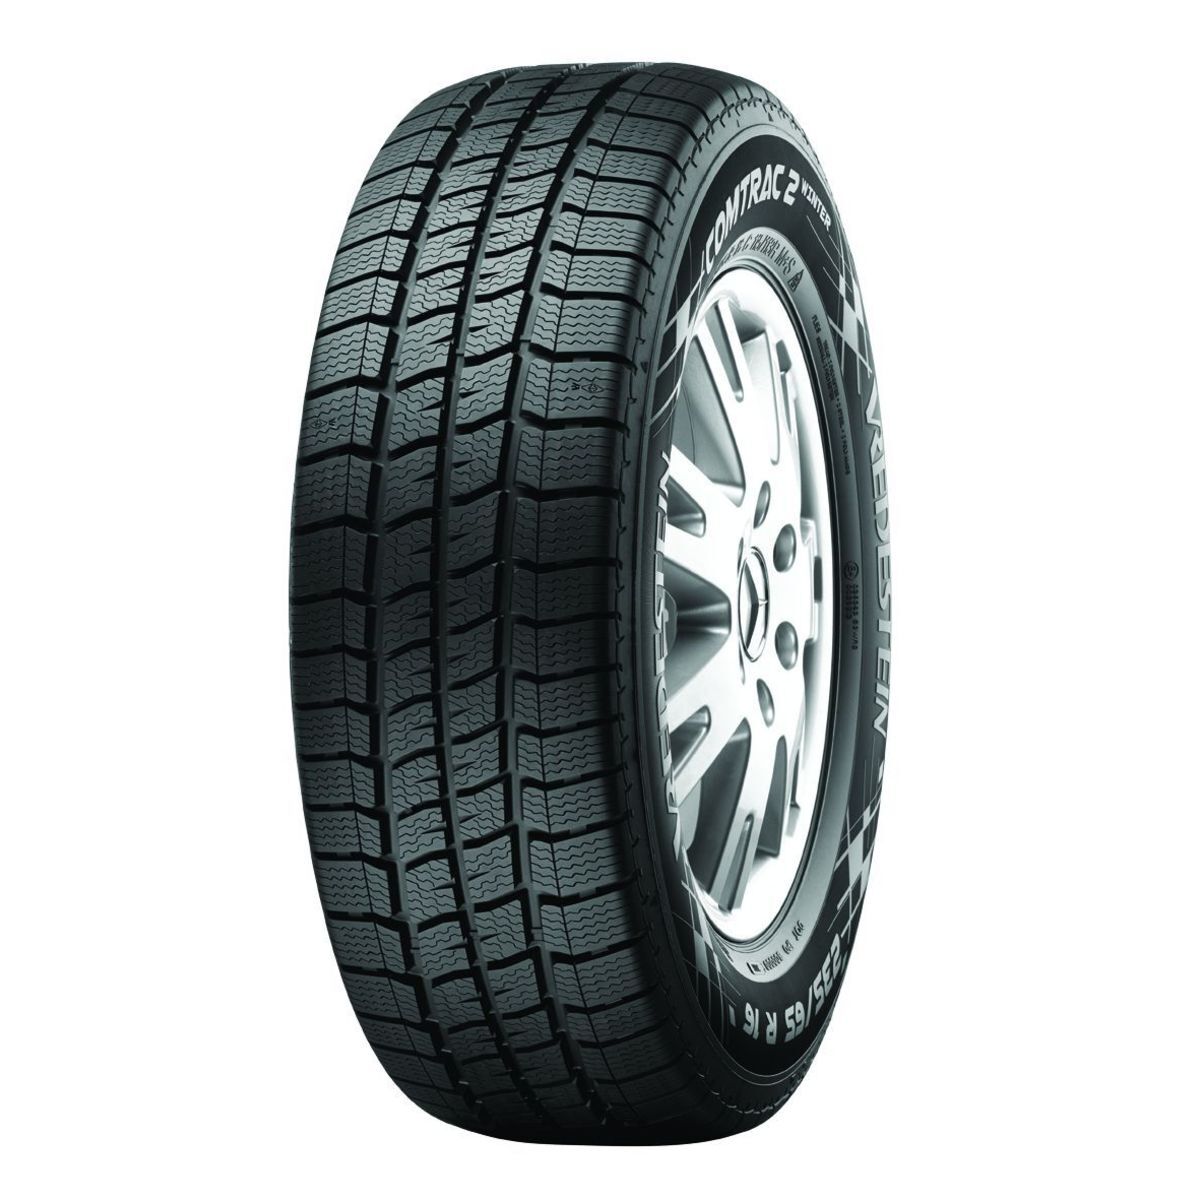 Neumáticos de invierno VREDESTEIN Comtrac 2 Winter+ 205/70R15C, 106/104R TL